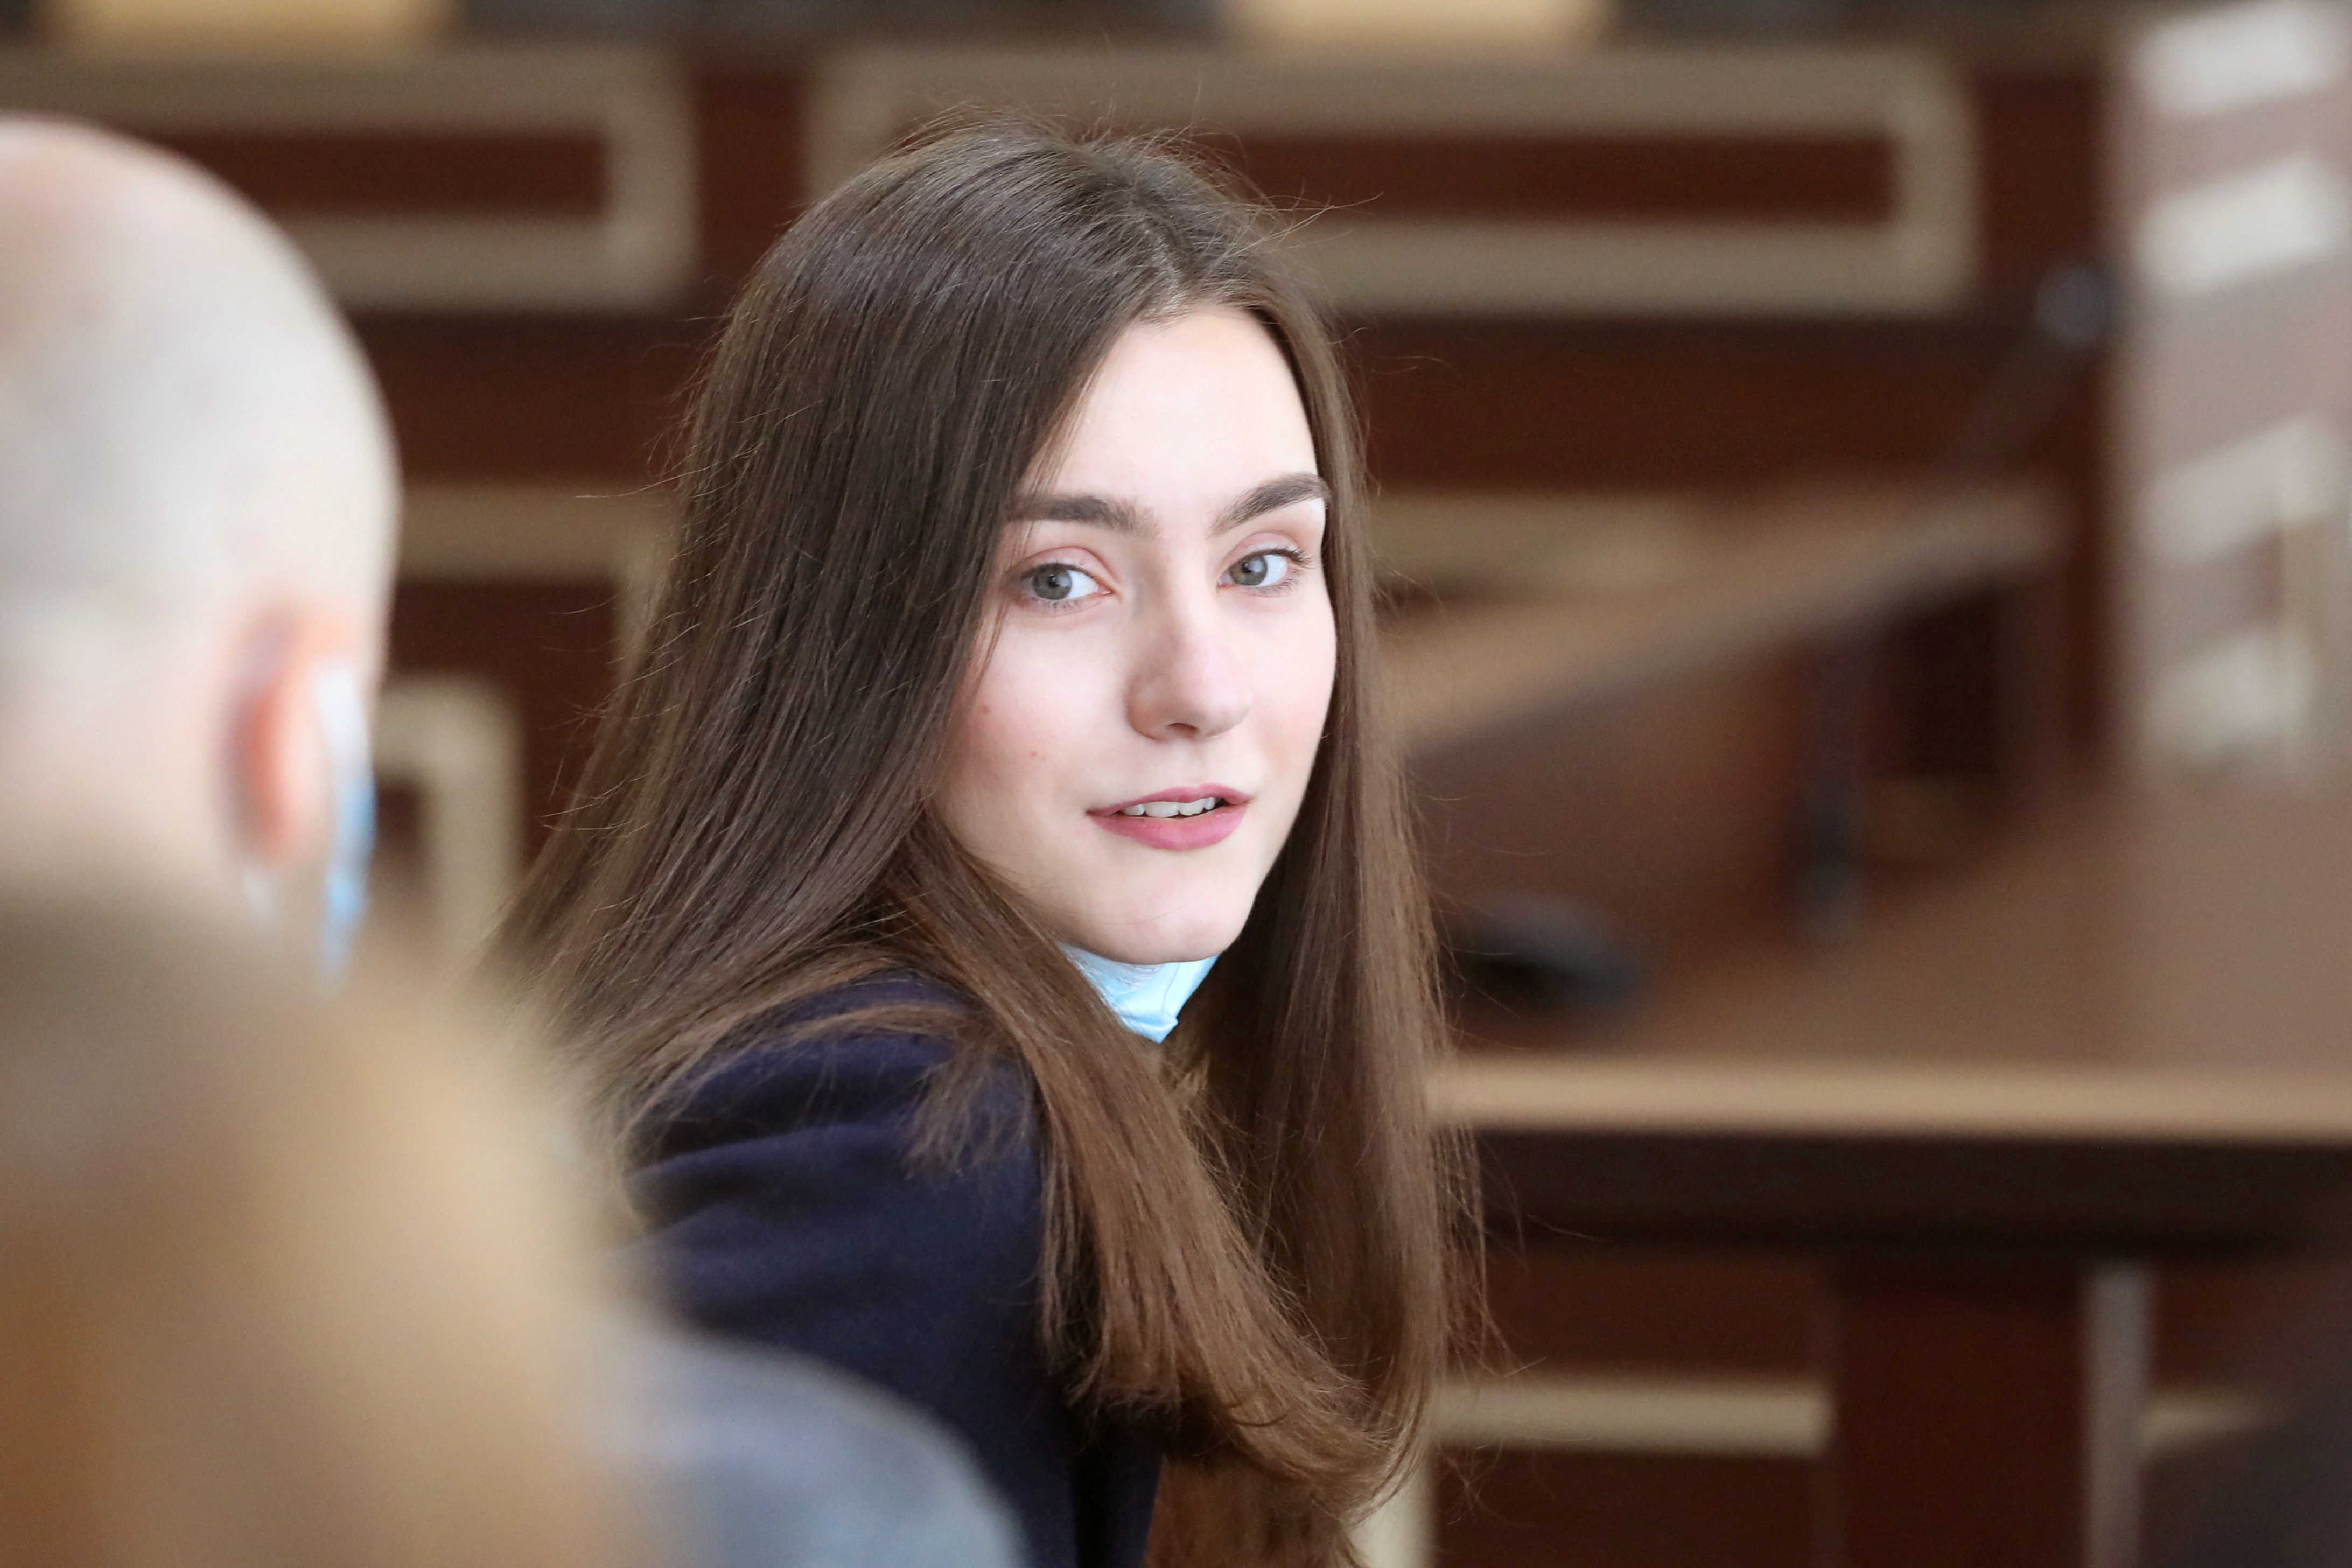 Russian citizen Sofia Sapega attends a court hearing in Grodno